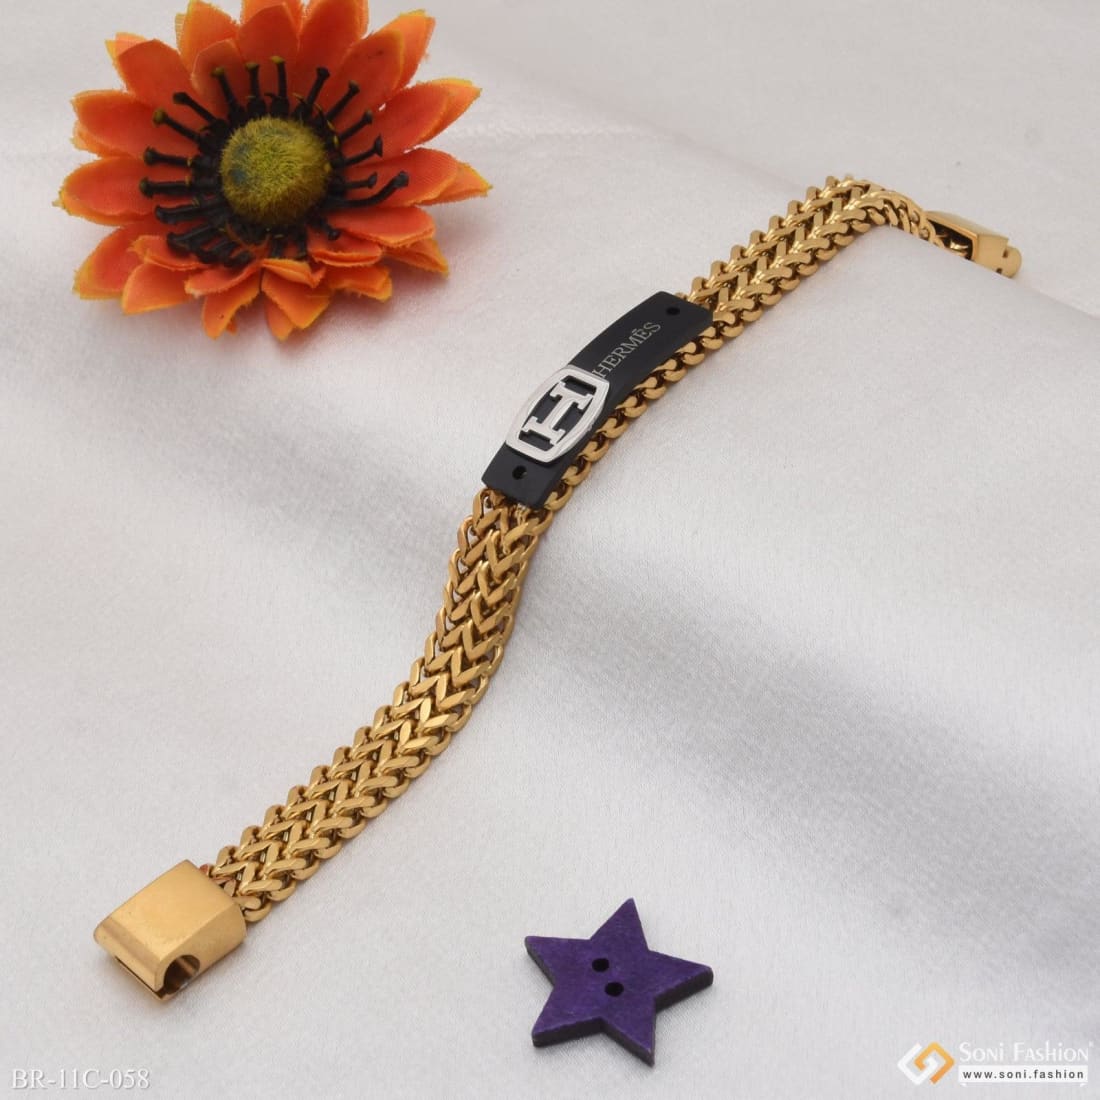 Stretch letter bracelets - alphabet beads. Make custom bracelets! - YouTube